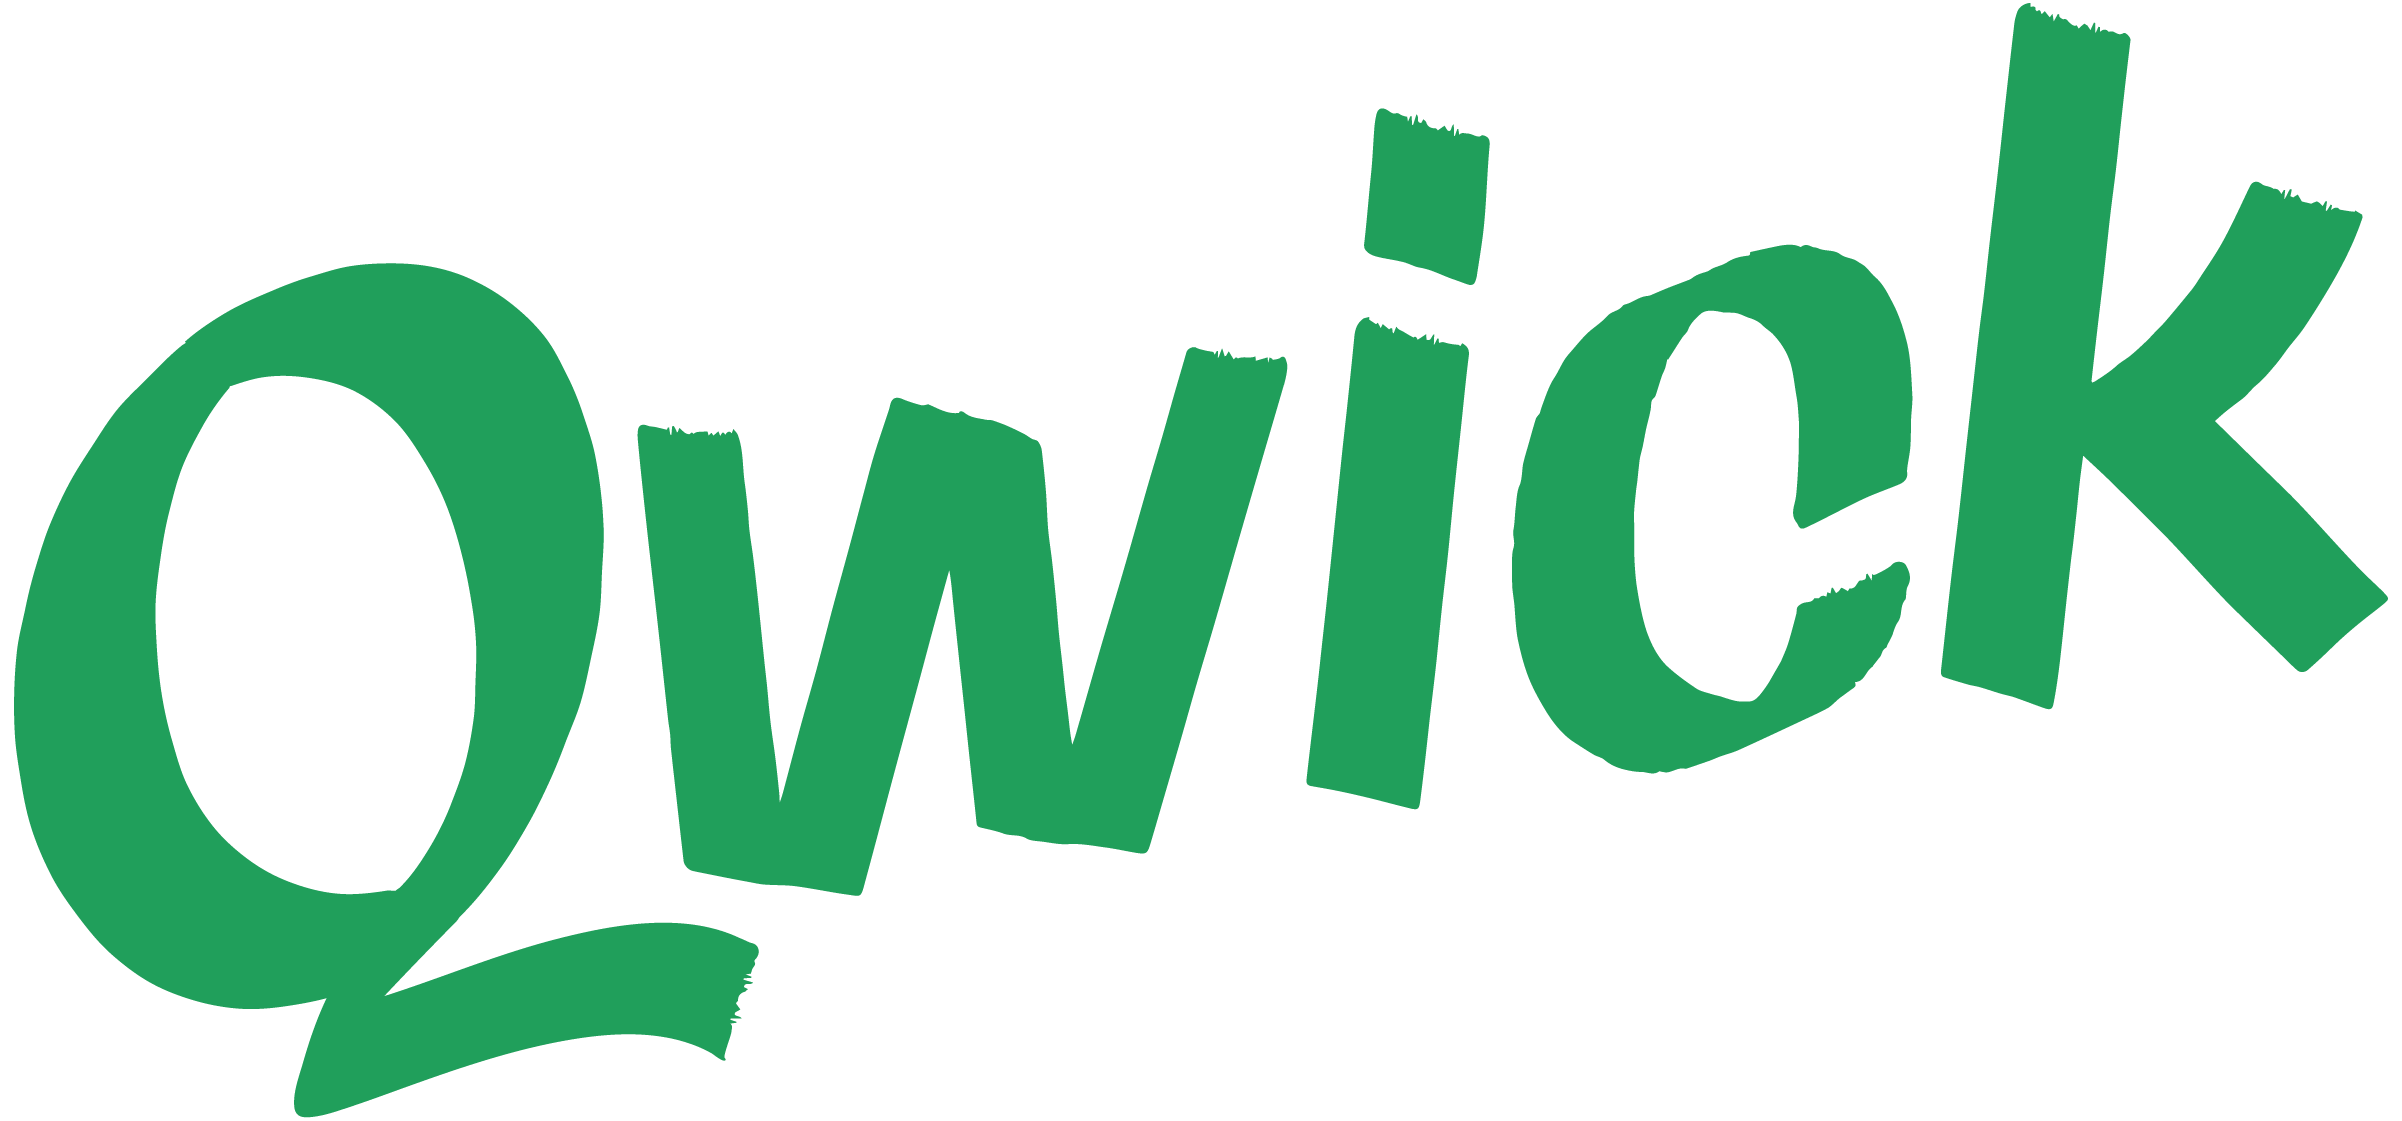 Qwick Lettuce Logo Transparent Background